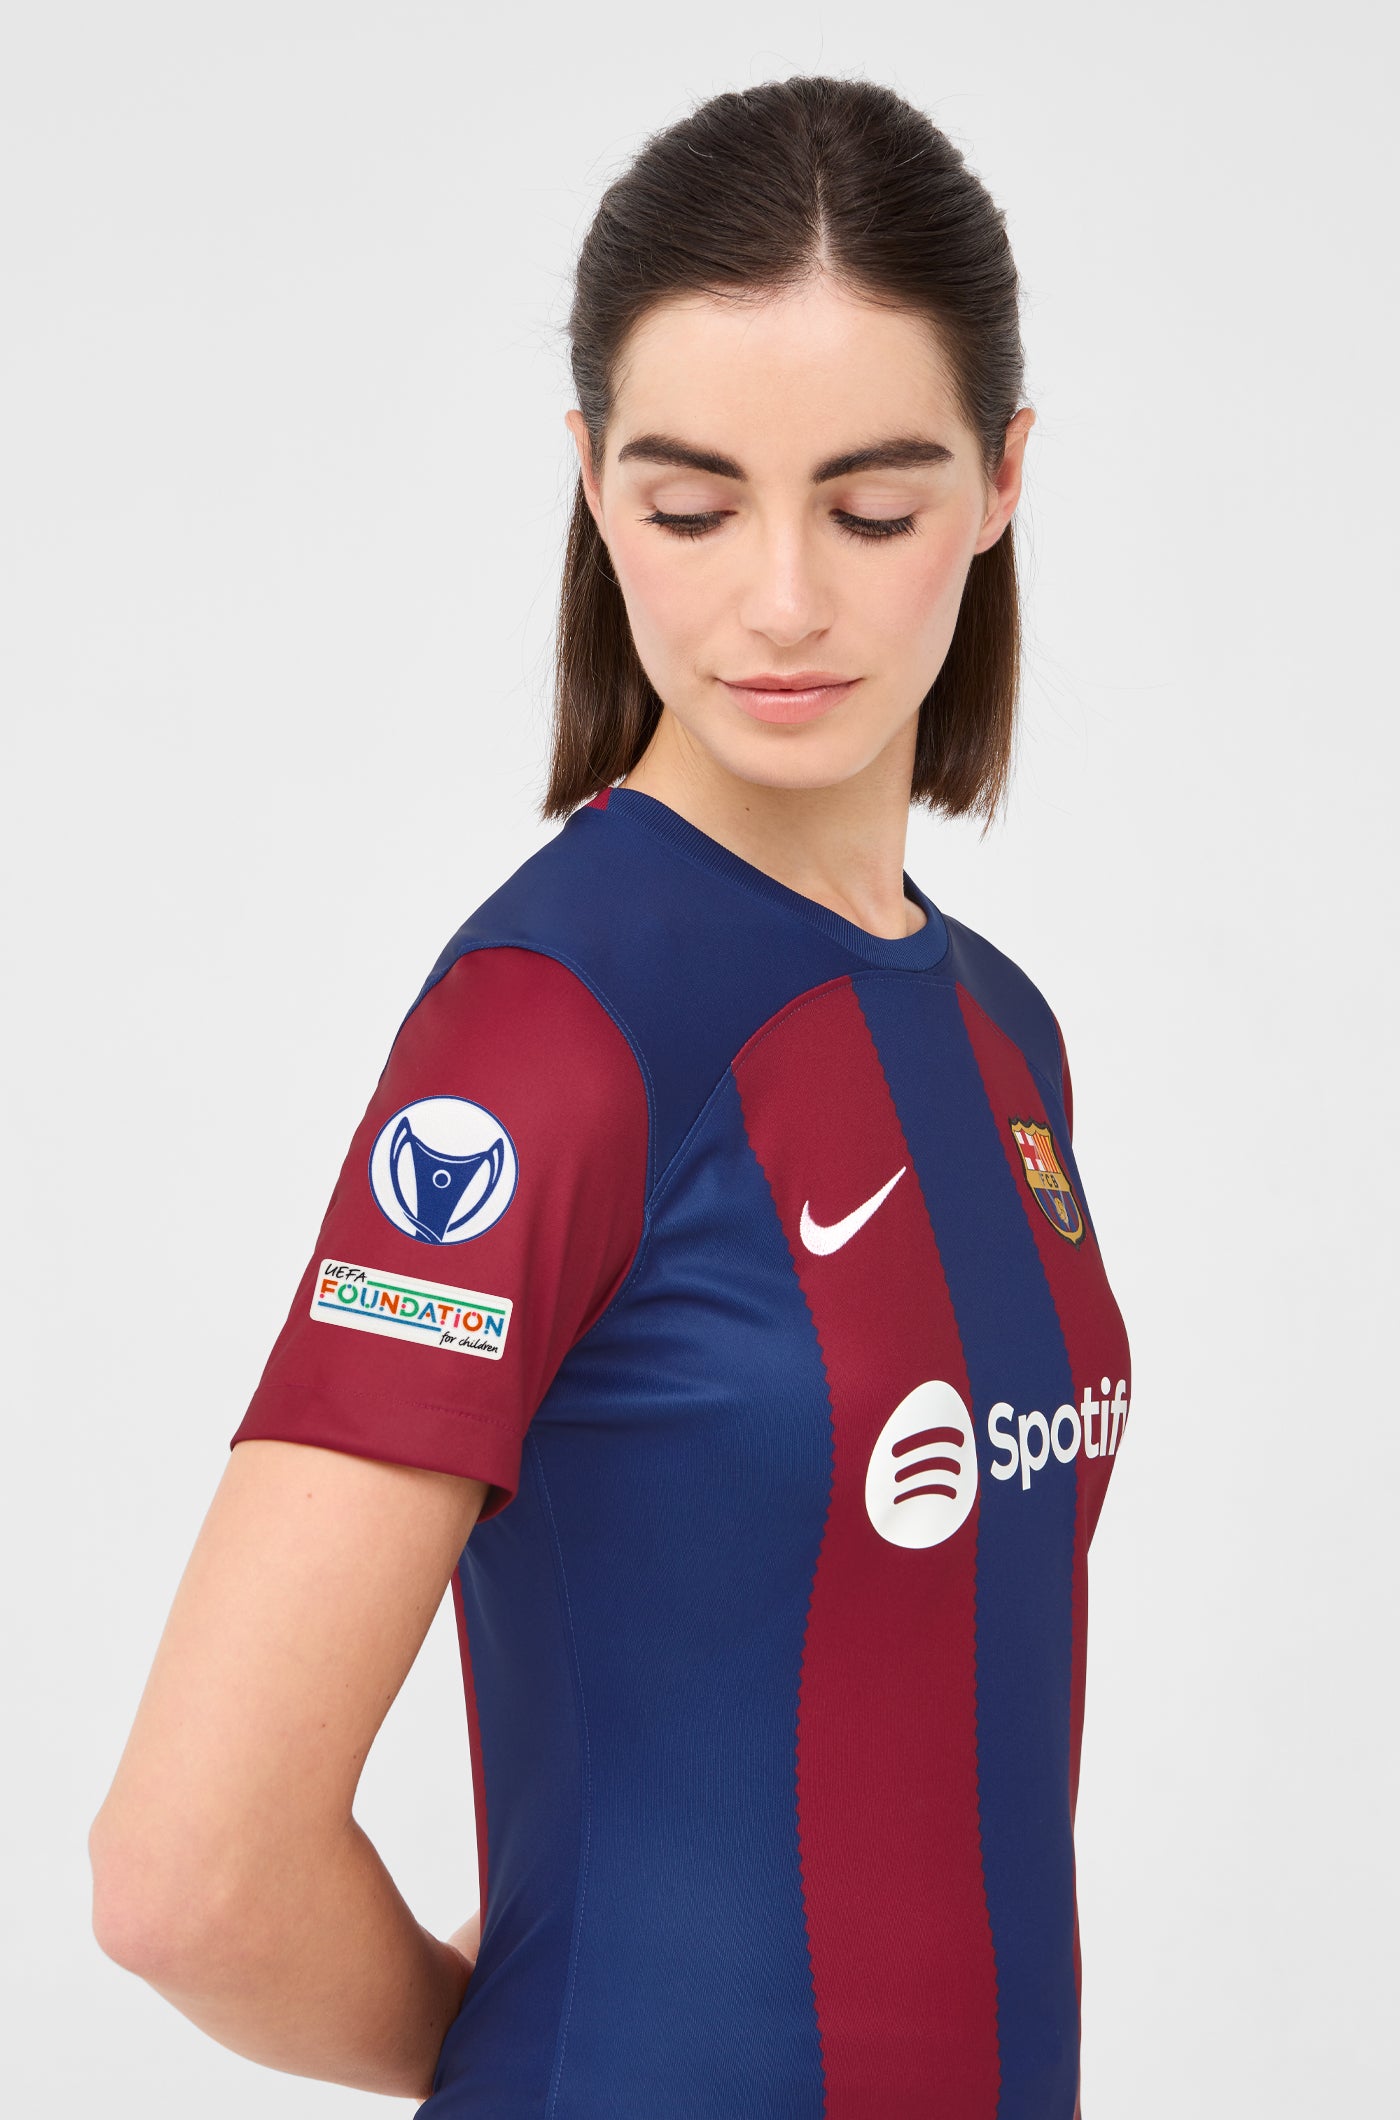 UWCL FC Barcelona home jersey 23/24 - Women